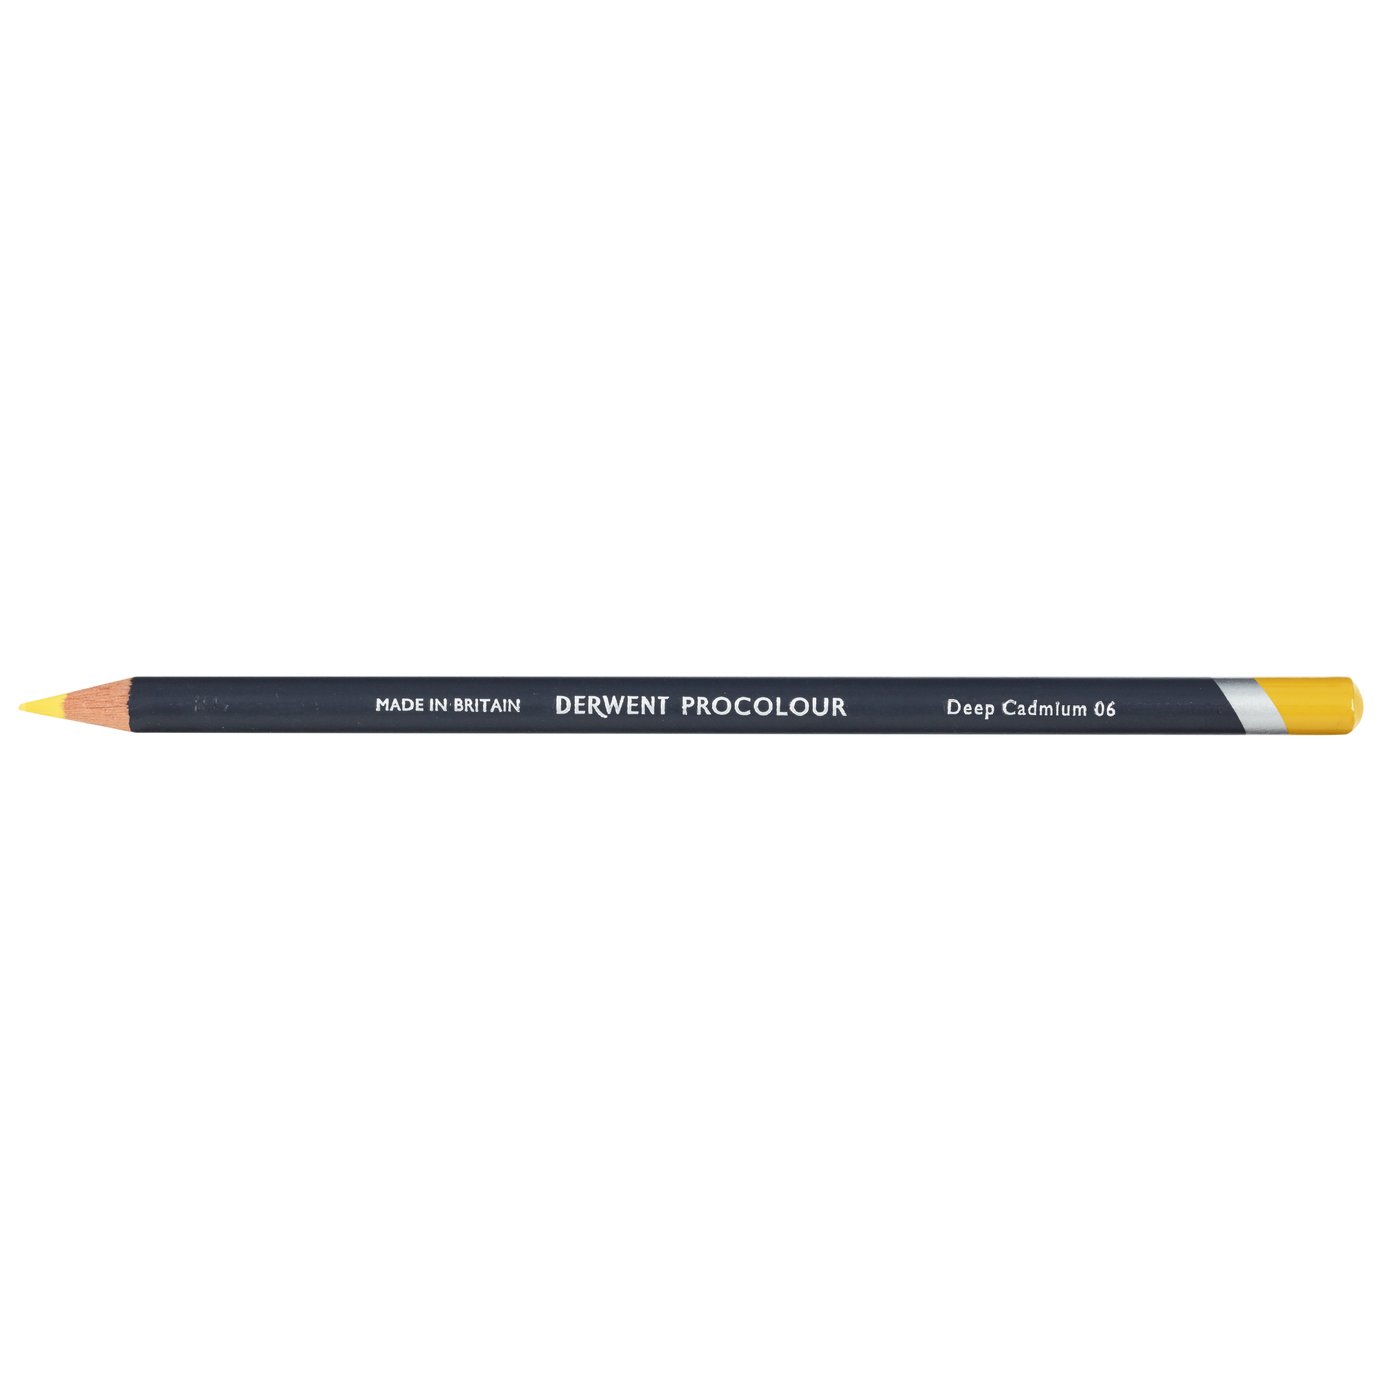 Derwent Procolour Pencil - 06 Deep Cadmium Yellow